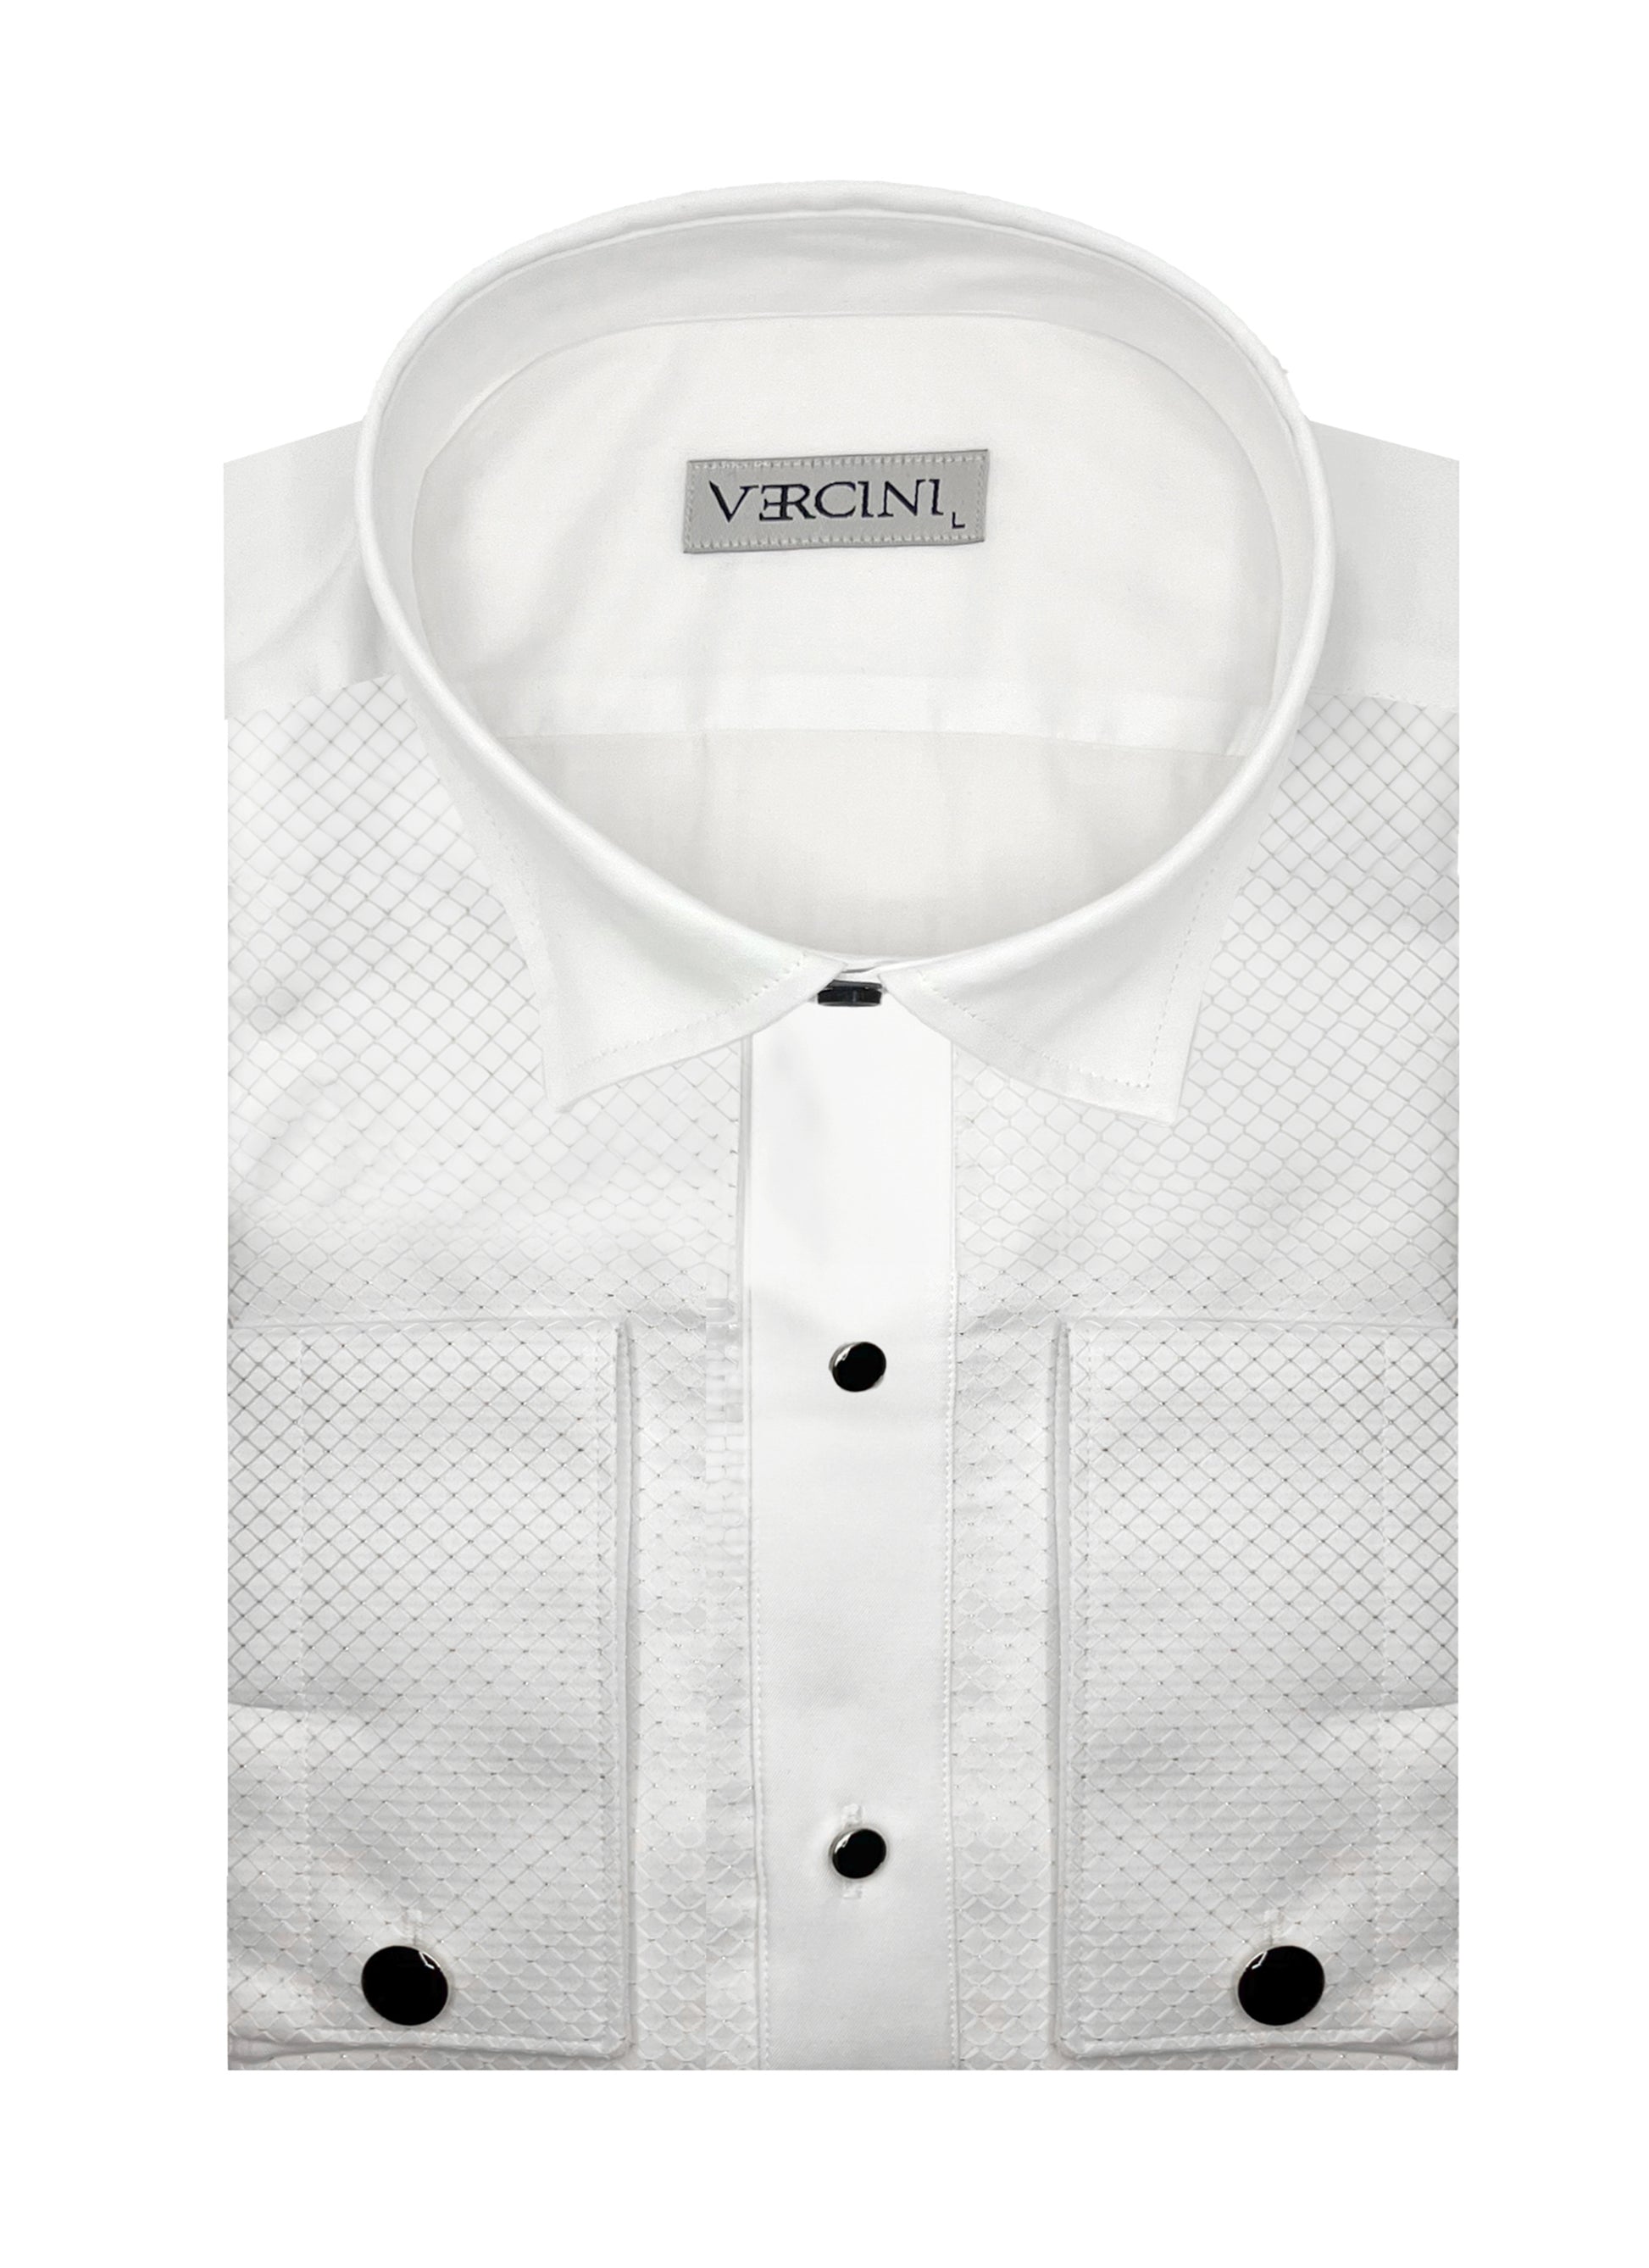 Vercini Pin Dot Embellished Mesh Elegance Dress Shirt DRESS SHIRTS Shirt Collection Vercini